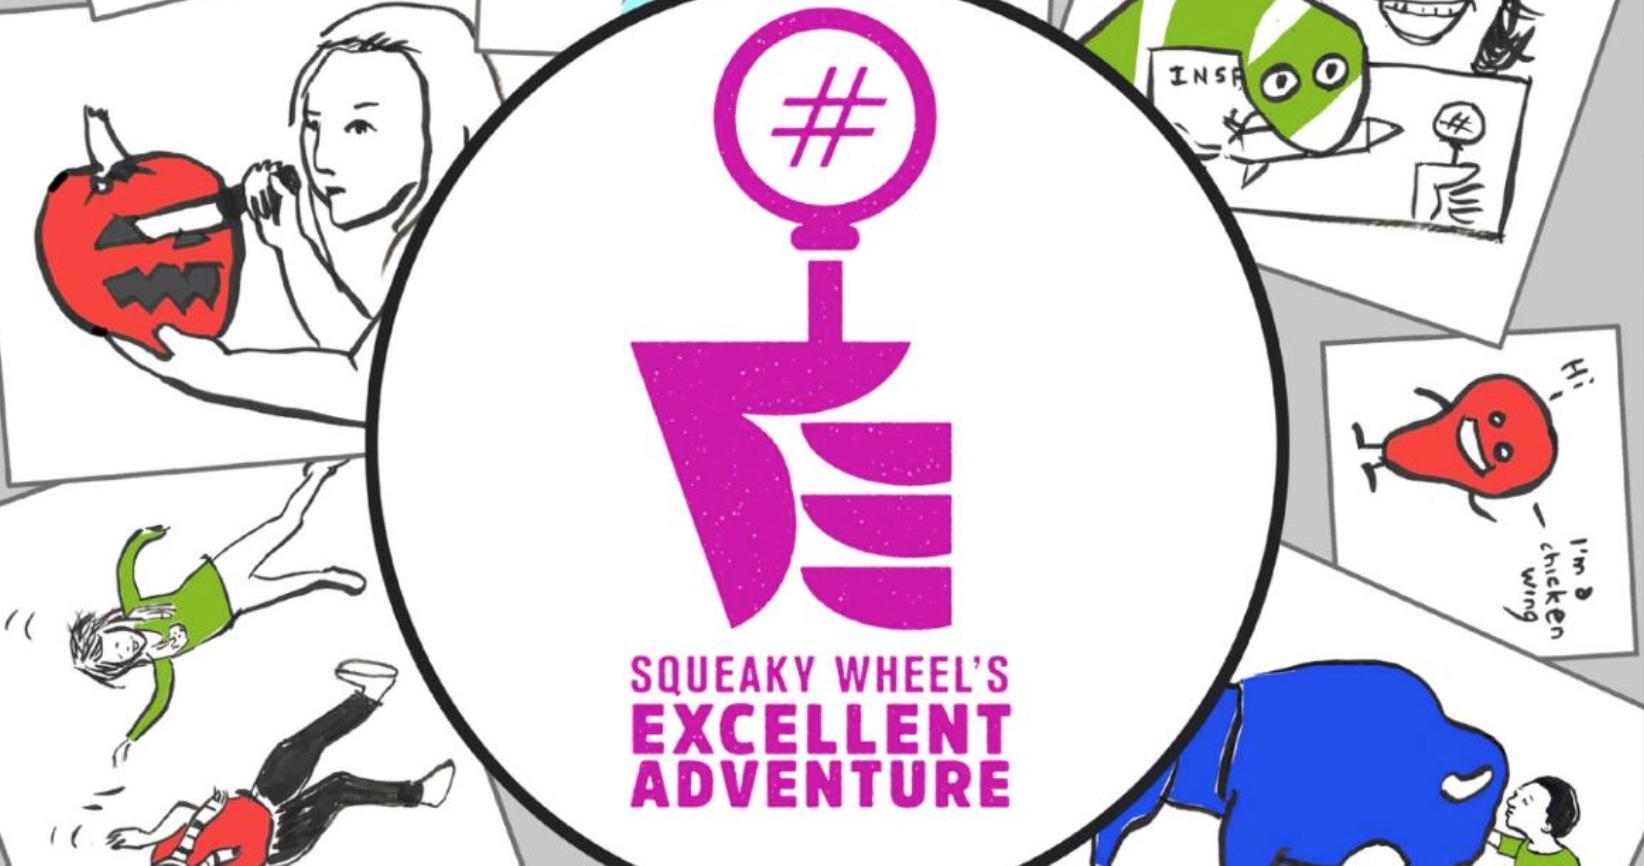 Squeaky Wheel's Excellent Adventure!